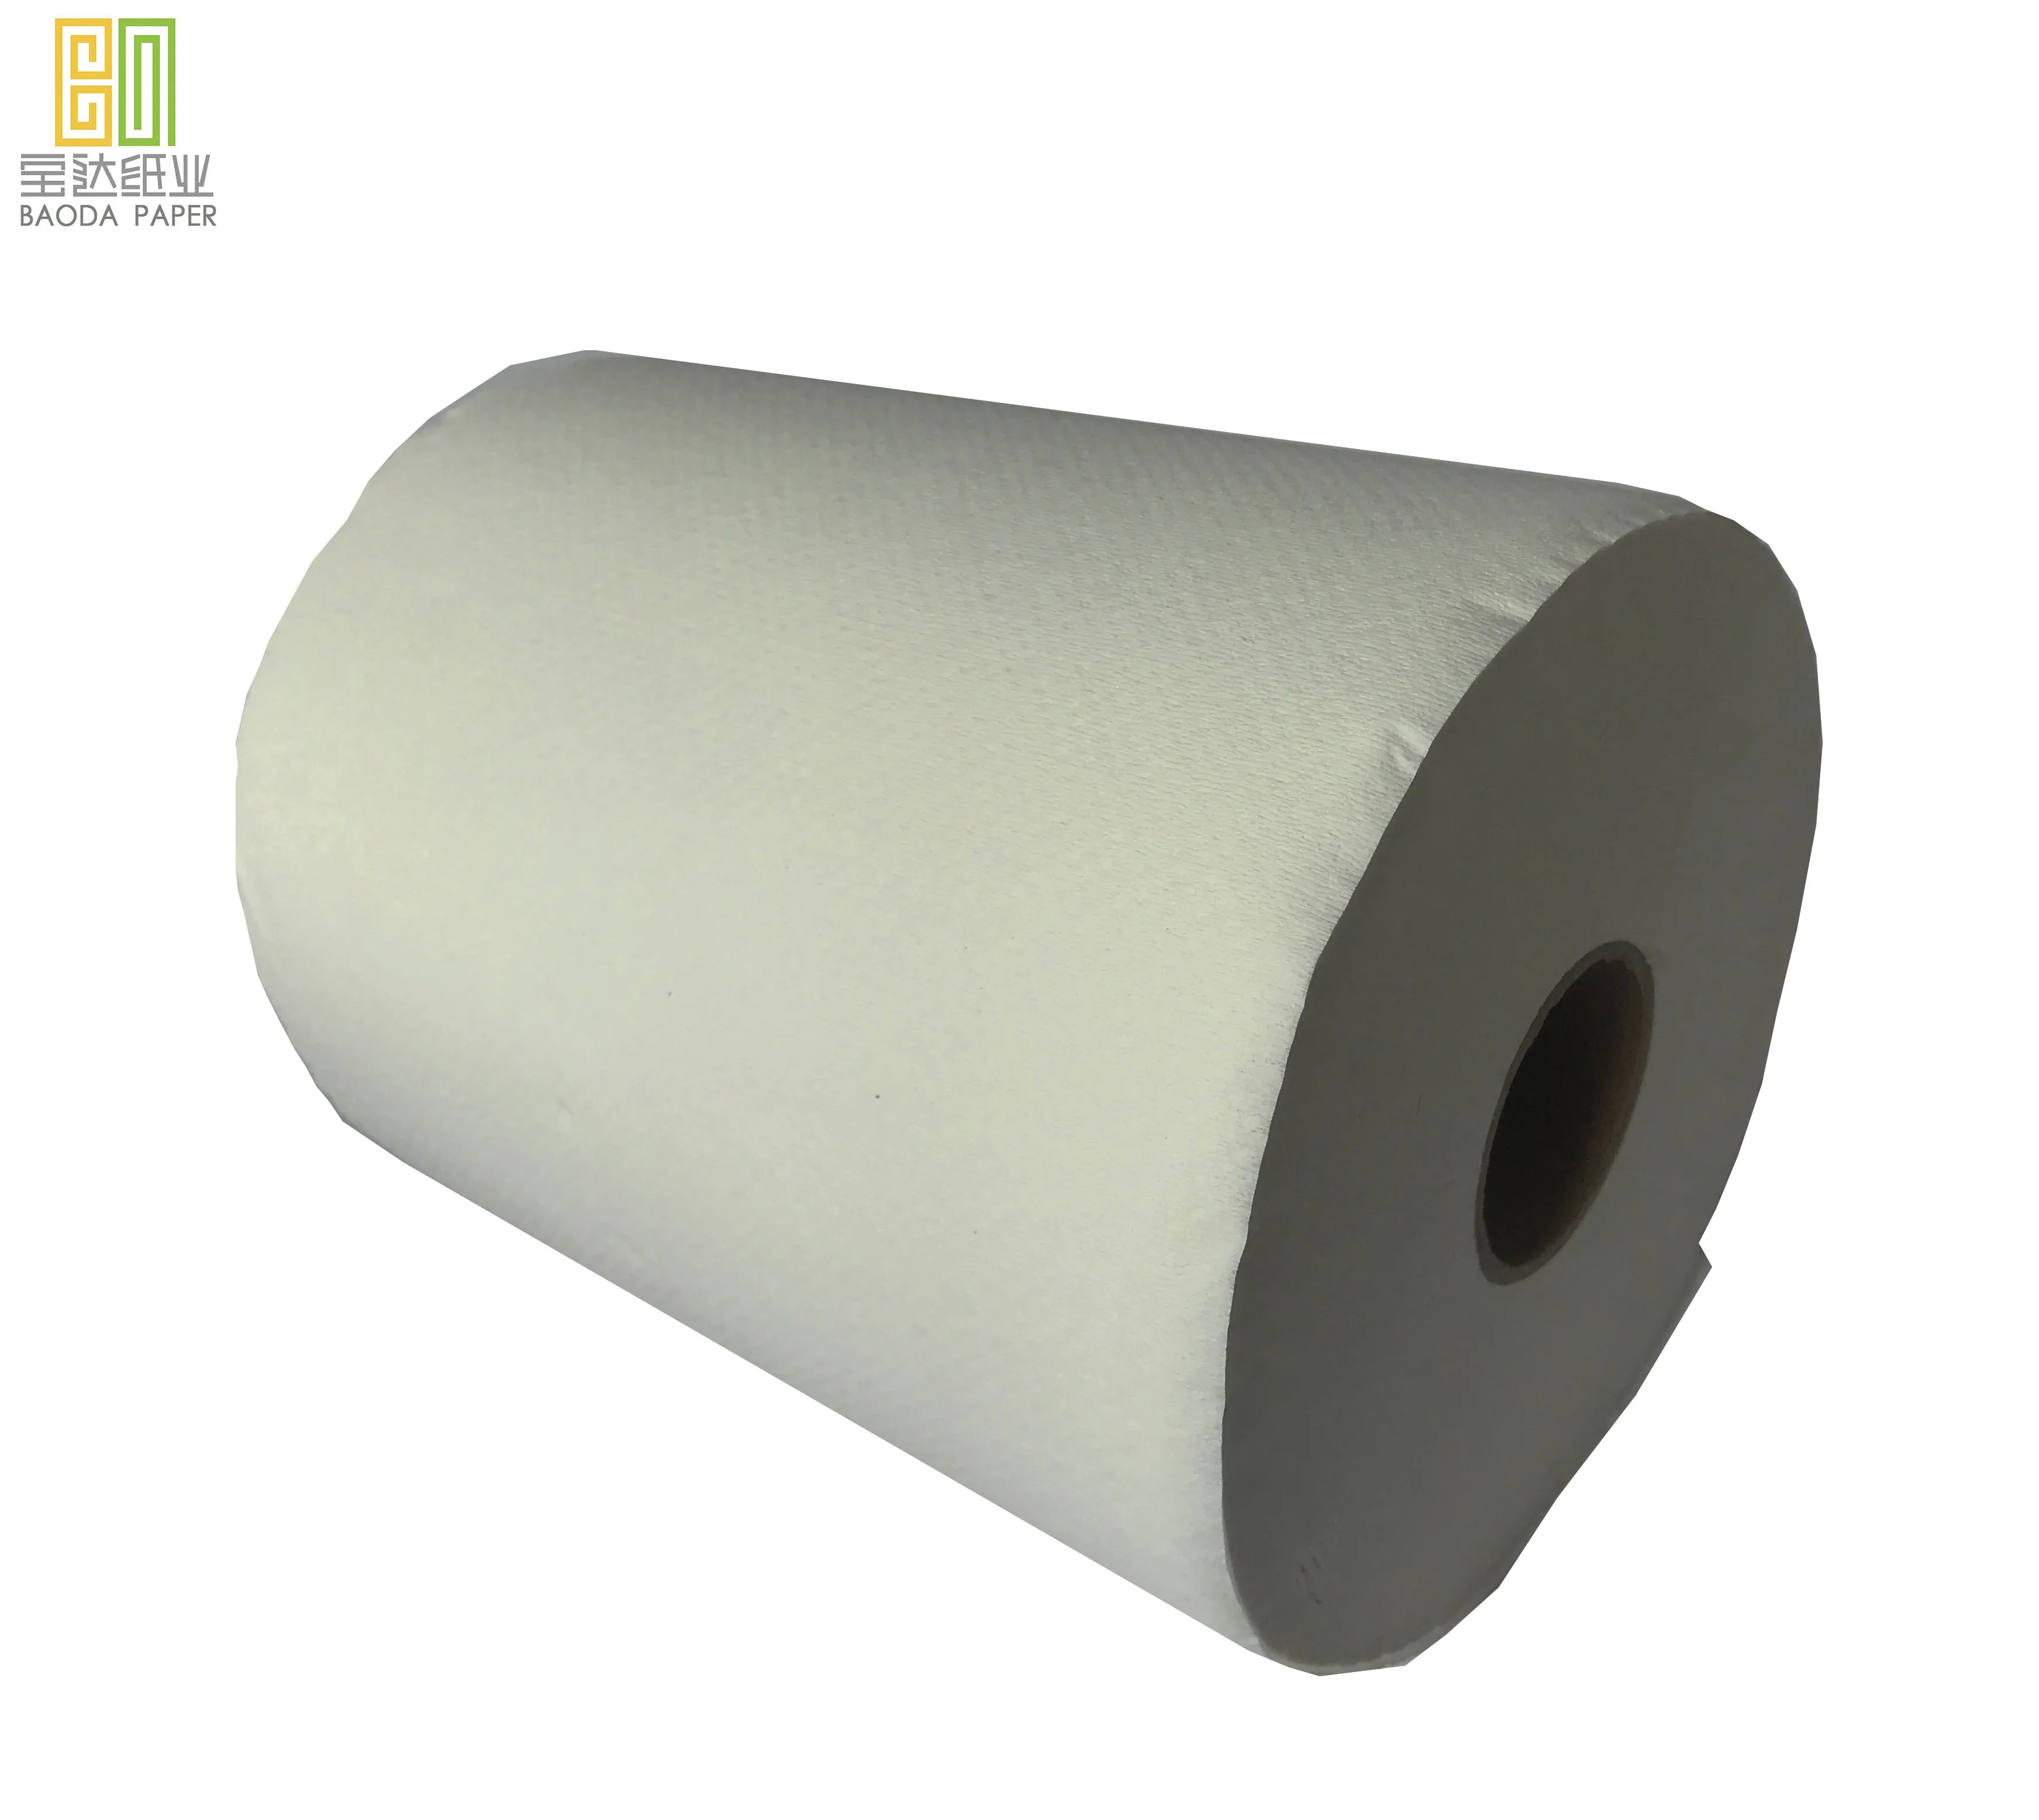 6 Rolls Towel Paper 1 Ply Plaster Paper large Roll 20cm x 280m 